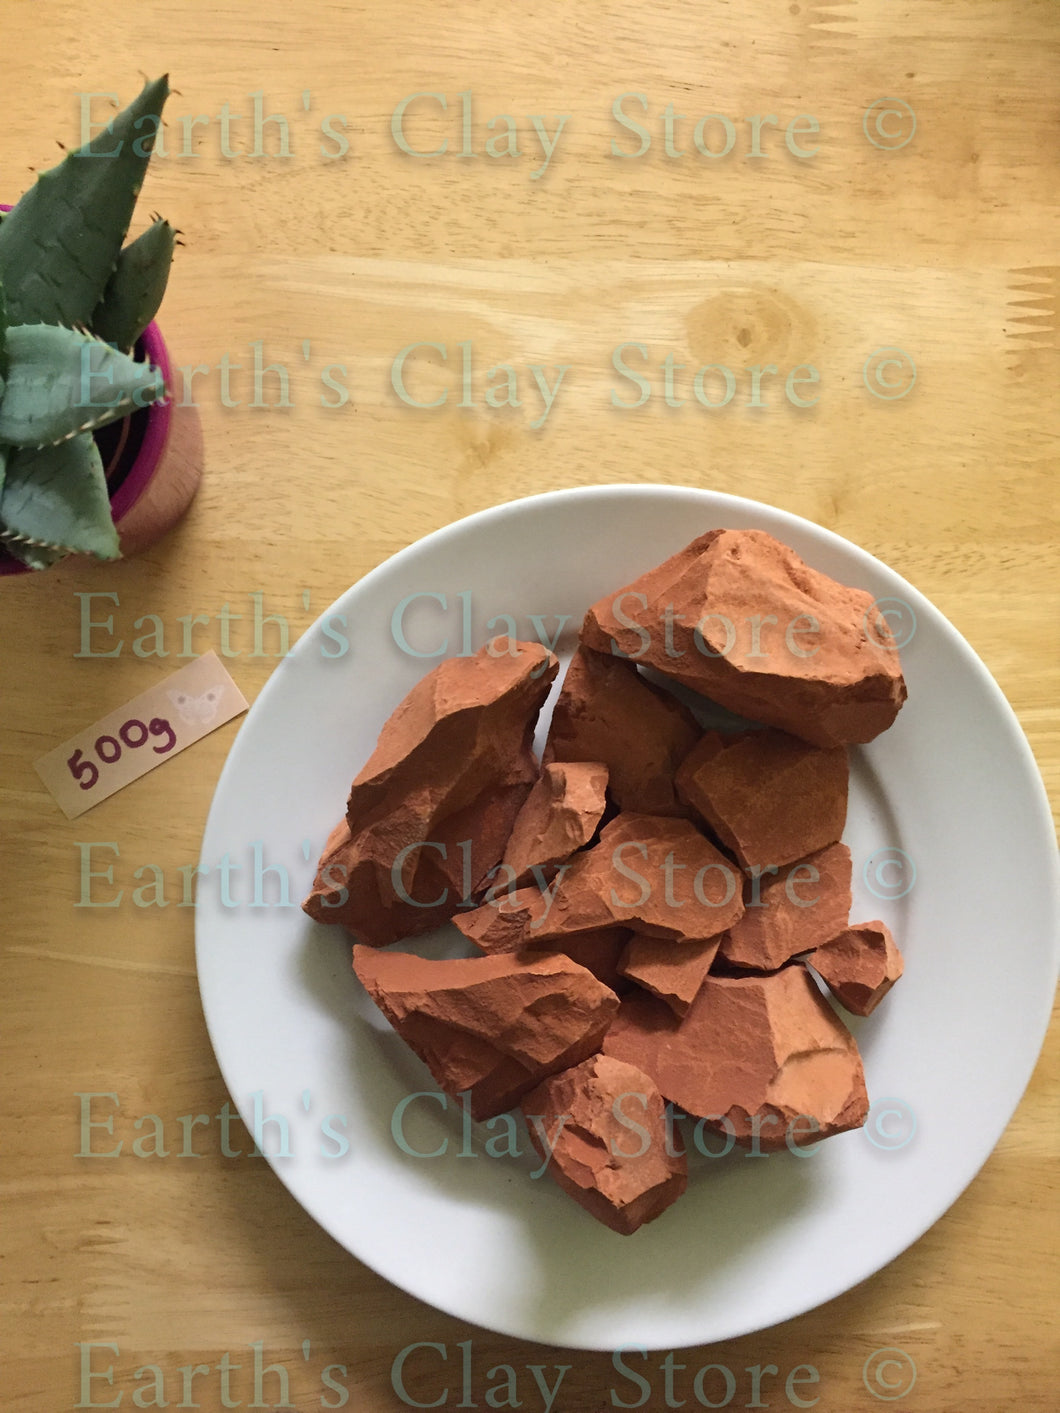 Uclays - edible chalk & clay